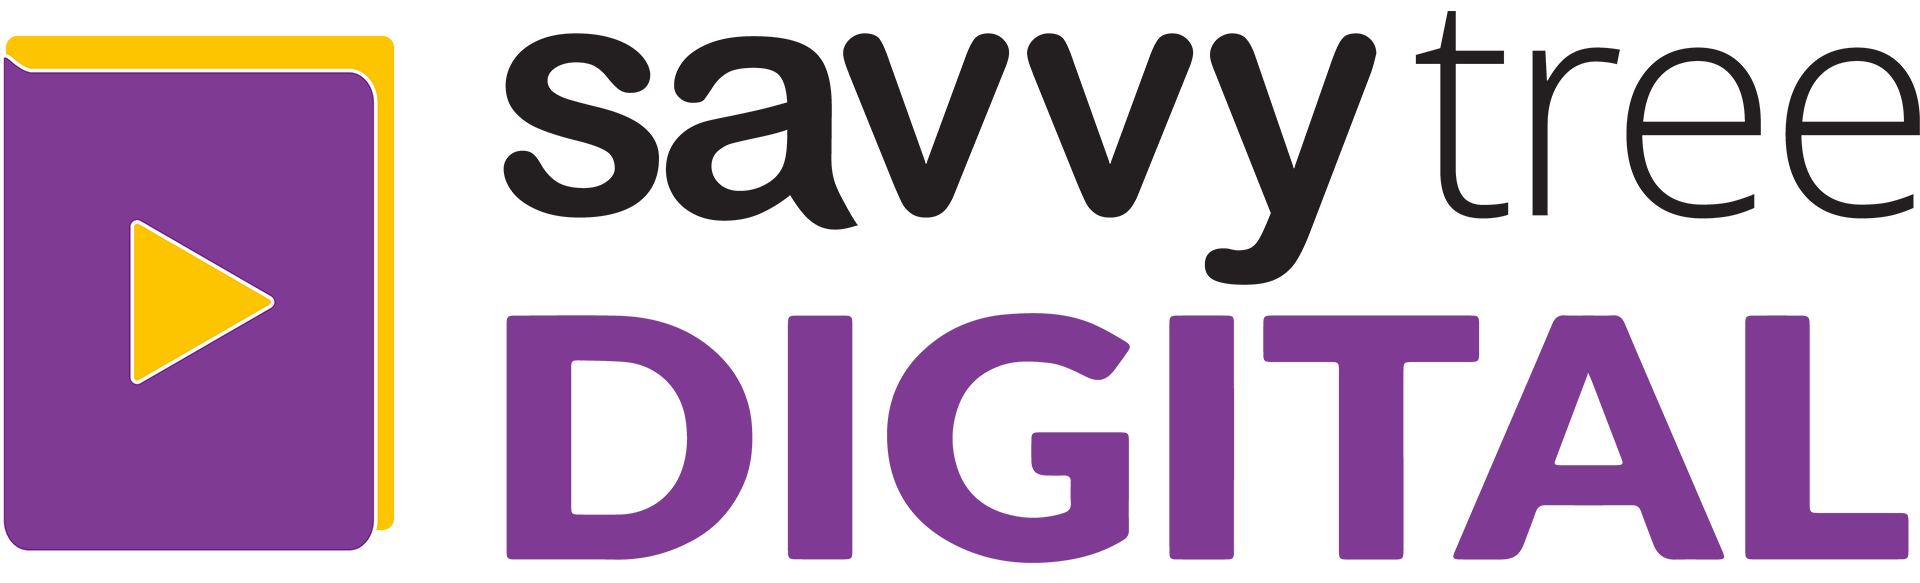 digital.savvytree